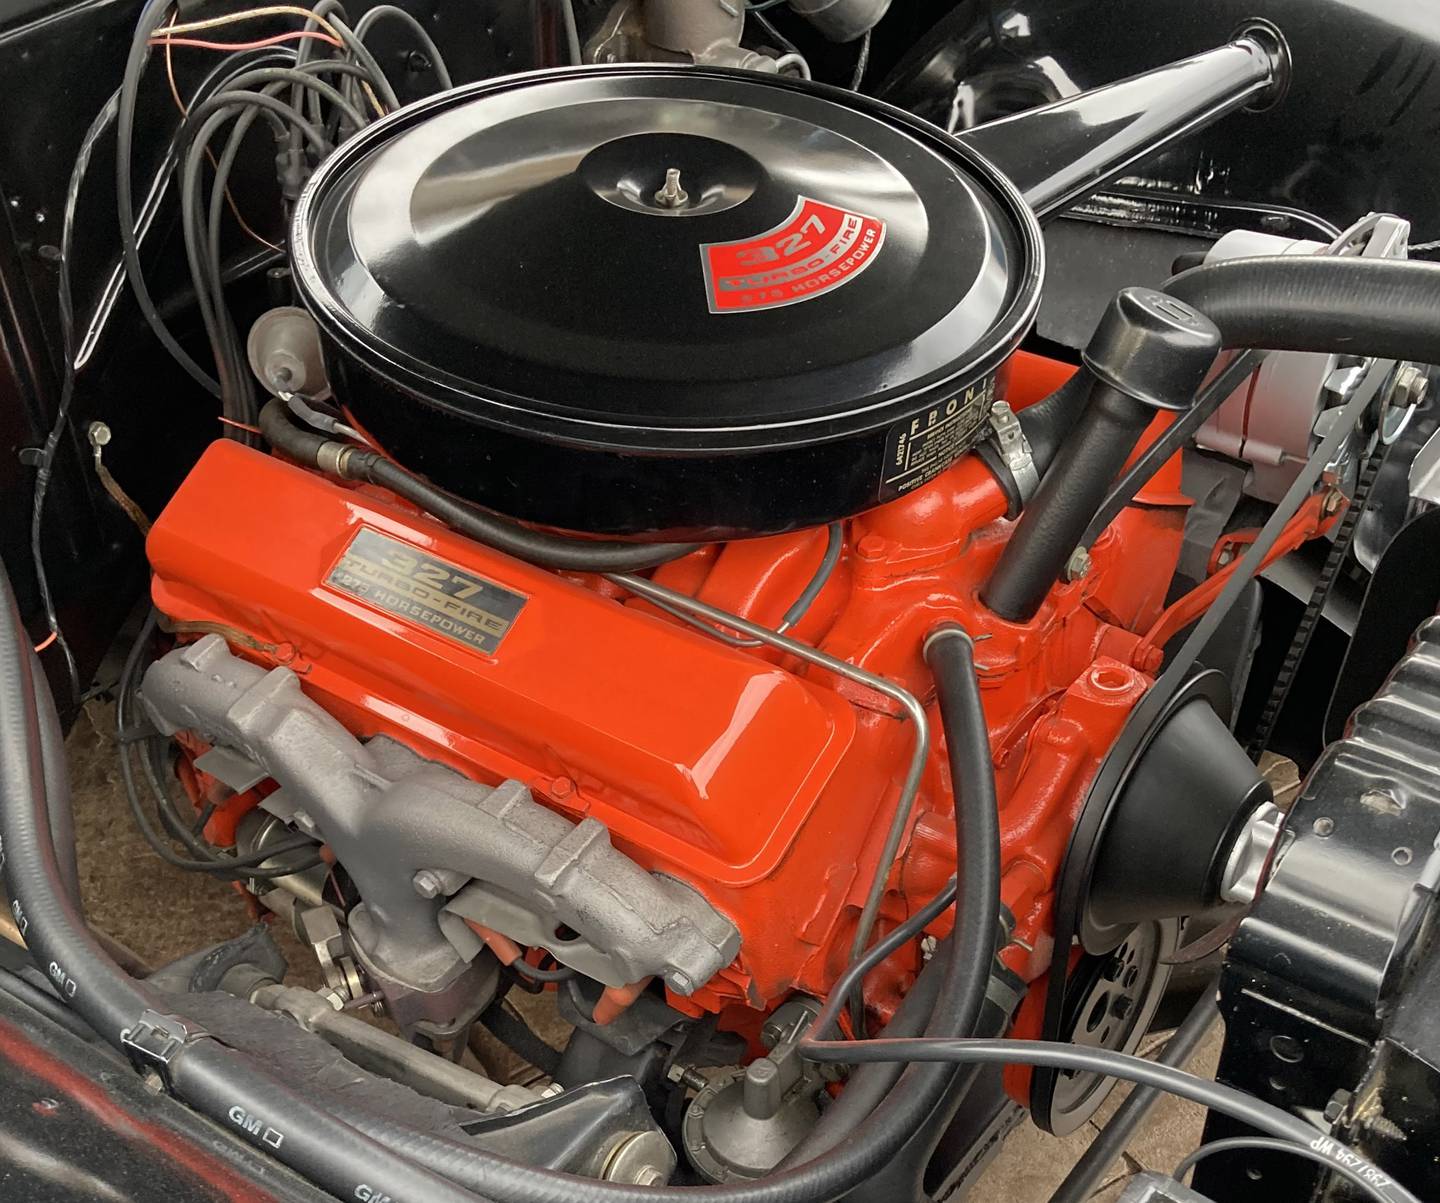 Photos by Steve Rubens - 1966 Impala SS Engine